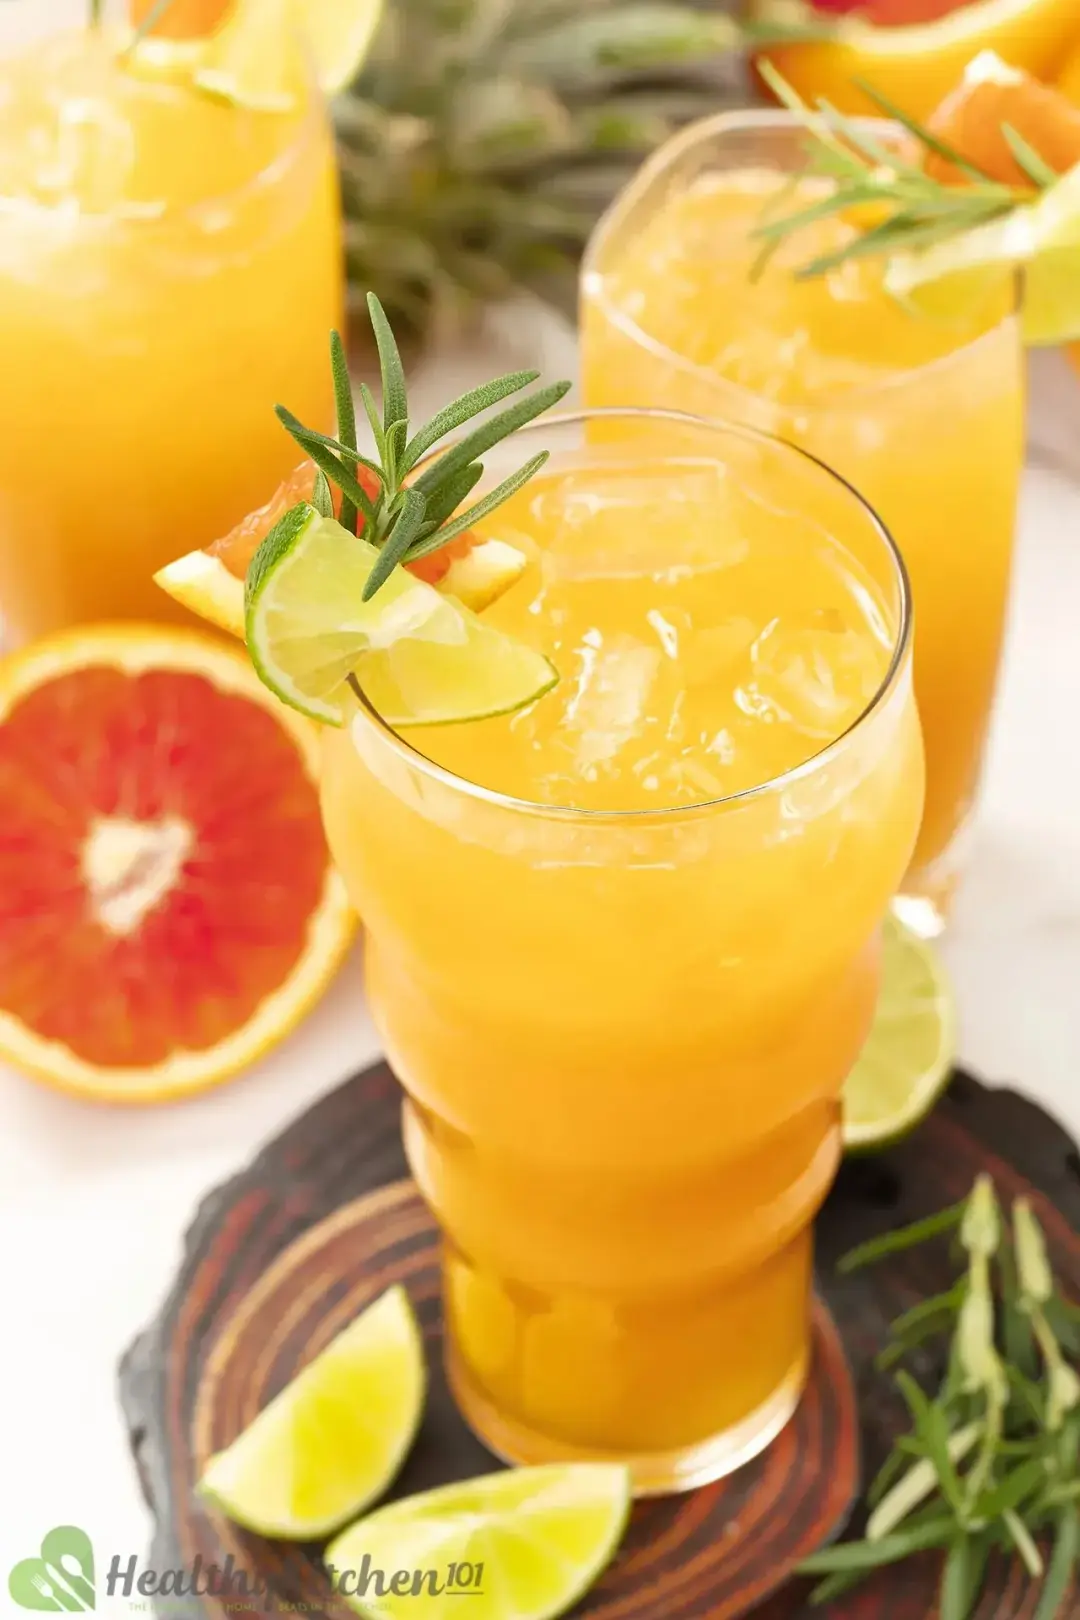 Homemade Tequila and Grapefruit Juice Recipe